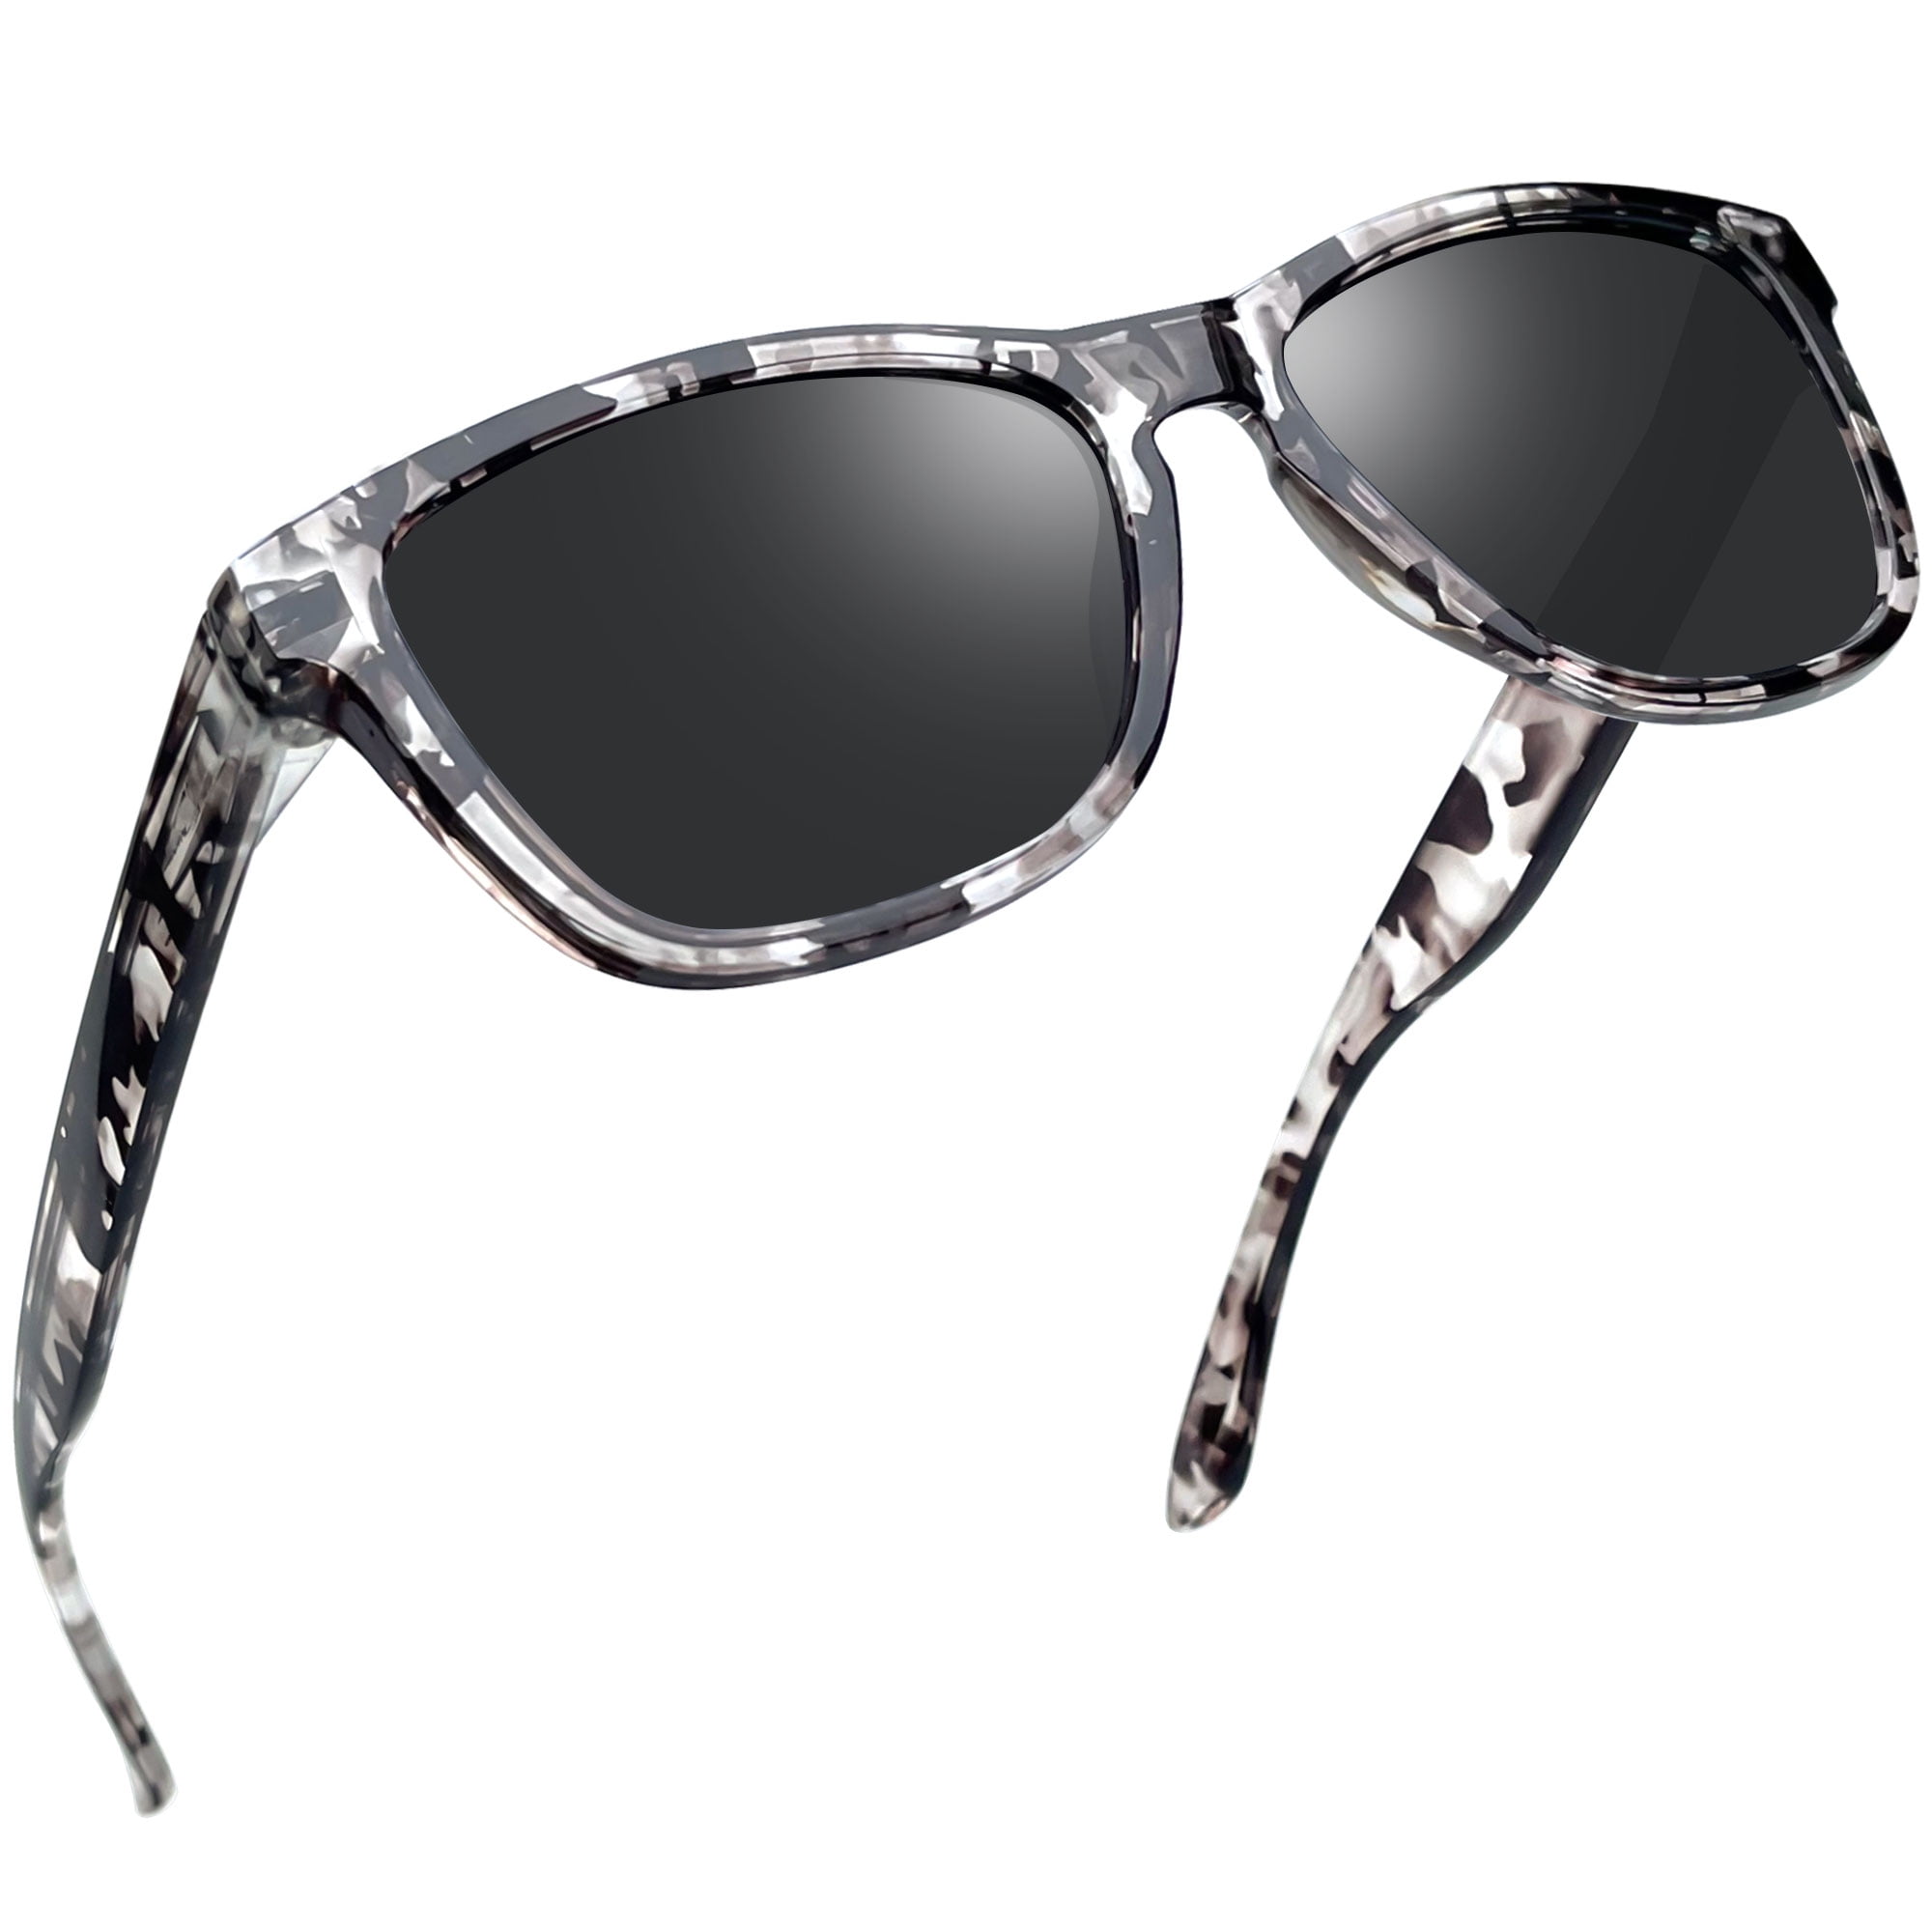 Joopin Polarized Sunglasses for Men Women Retro Shades for Driving Fishing UV400 Protection (Camo/Black)